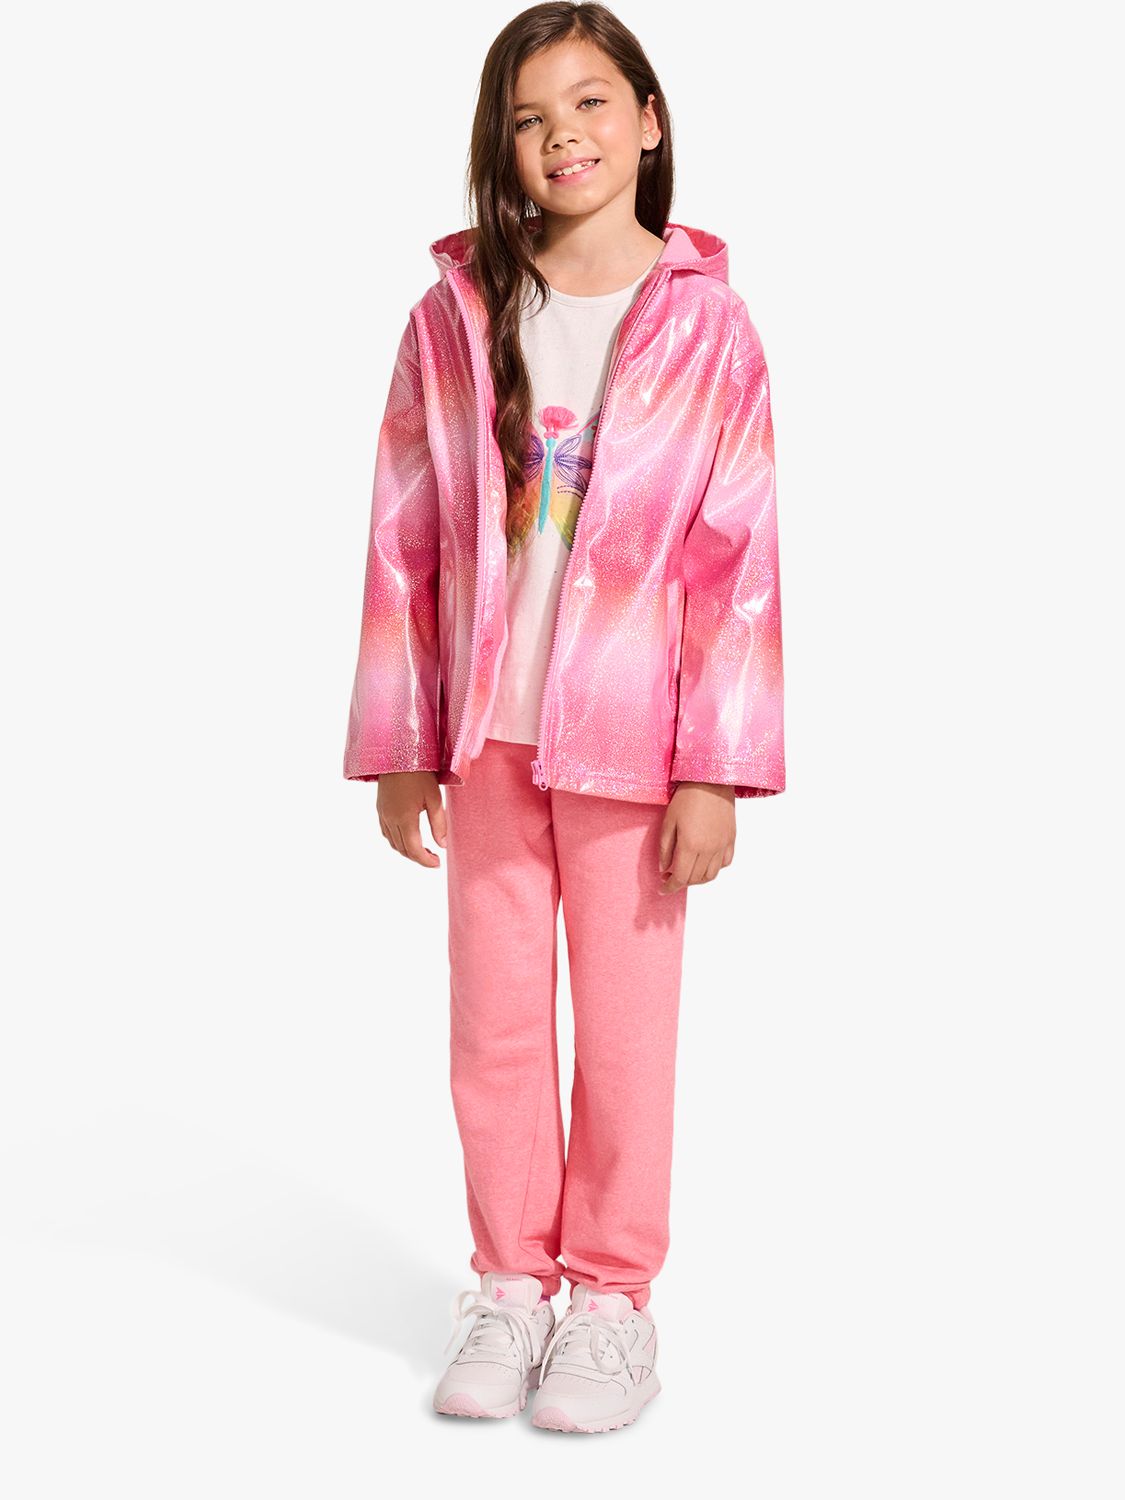 Hatley Kids' Summer Stripe Glitter Zip Up Hooded Rain Jacket, Sachet Pink, 12 years